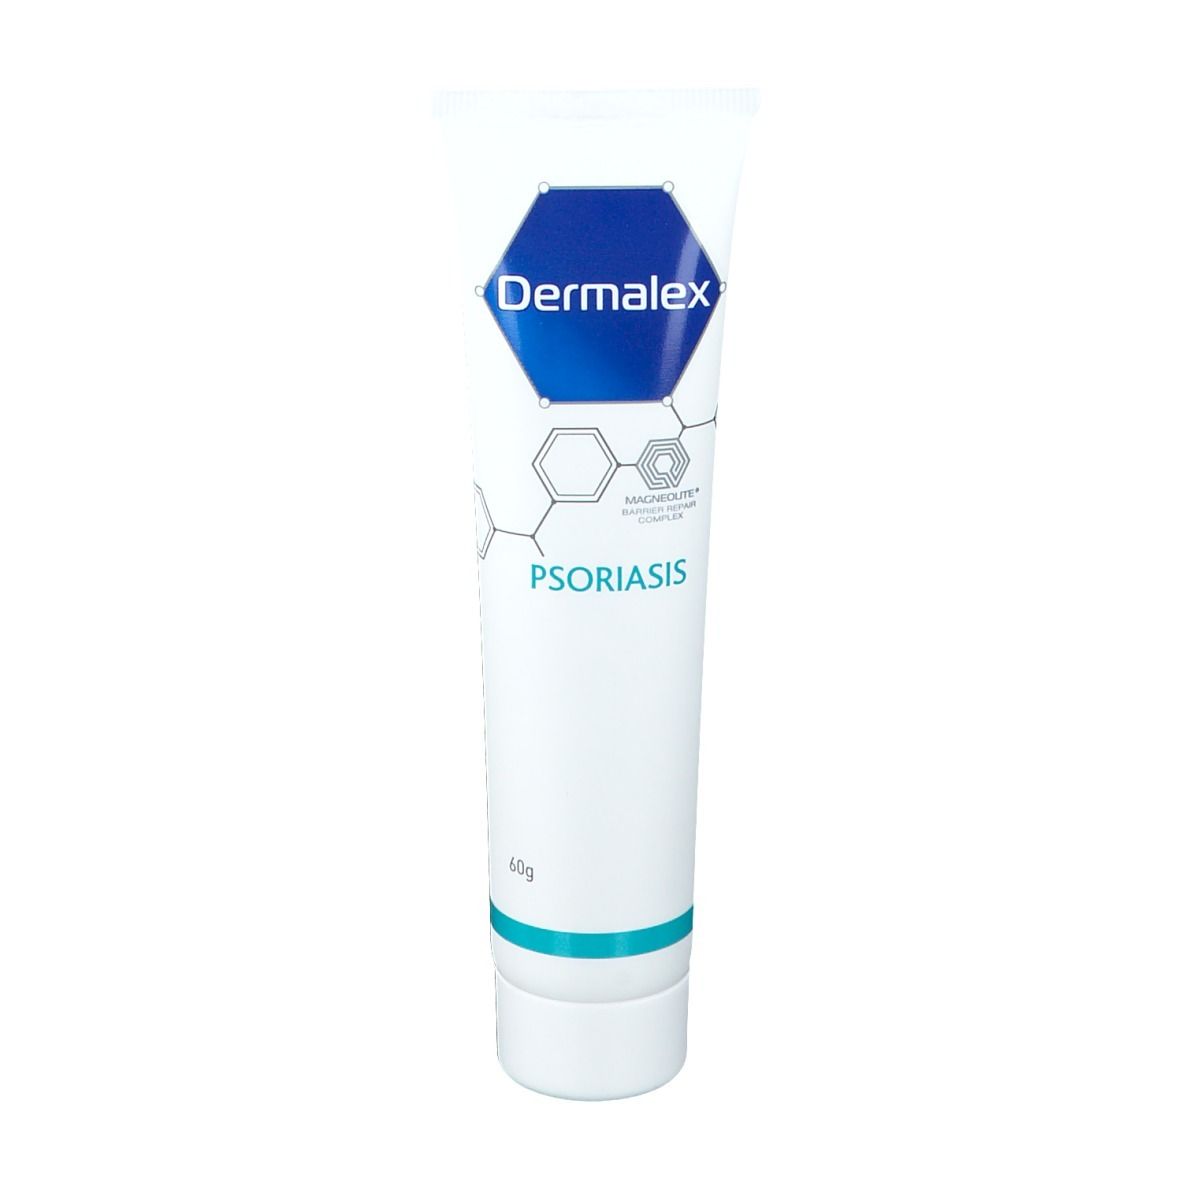 Image of Dermalex Psoriasis Dermatologische Behandlung